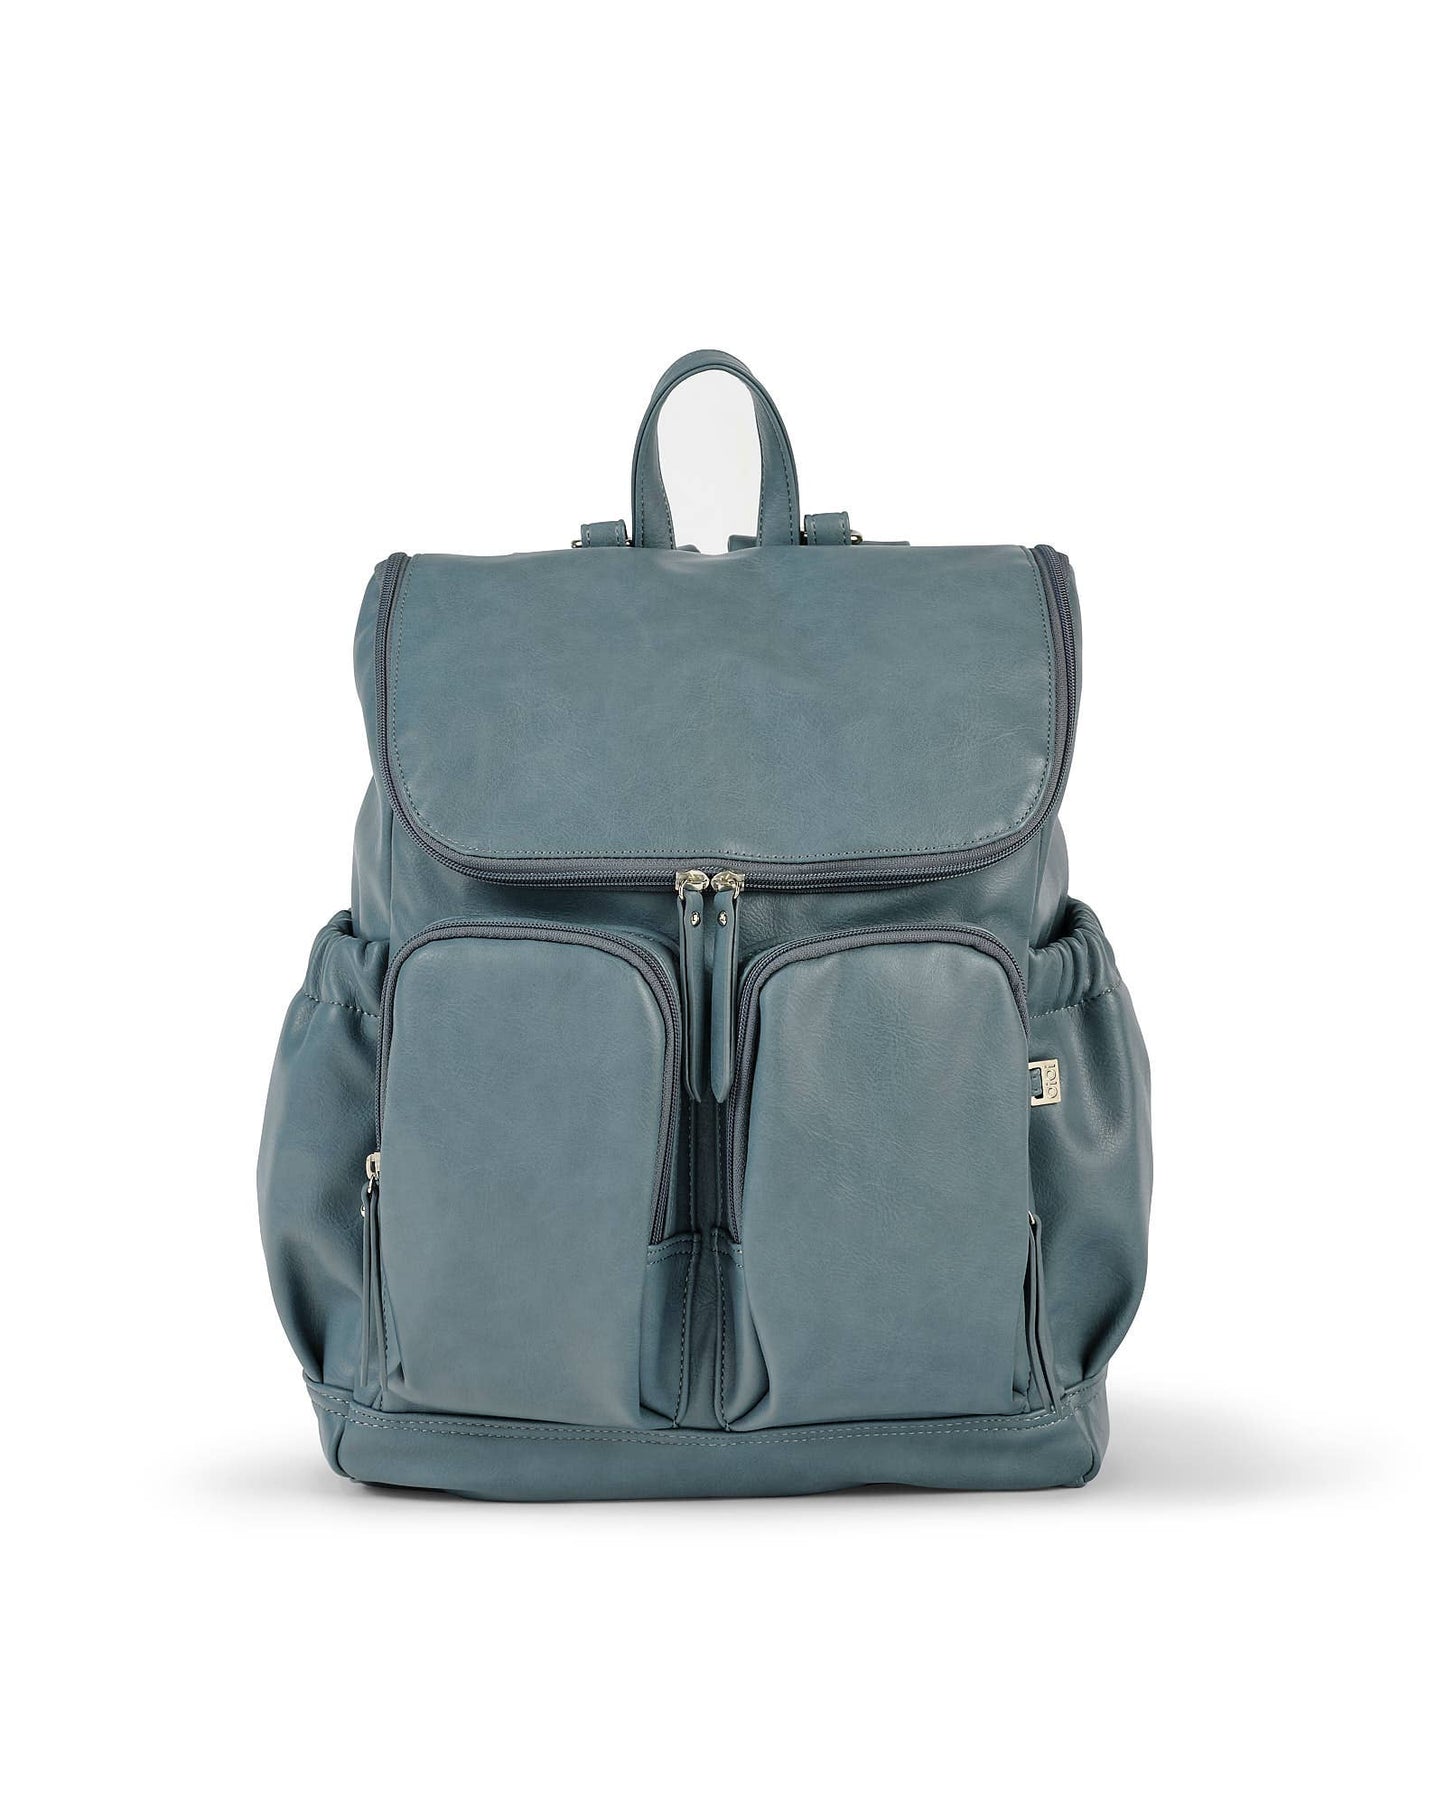 Signature Nappy Backpack - Stone Blue Vegan Leather